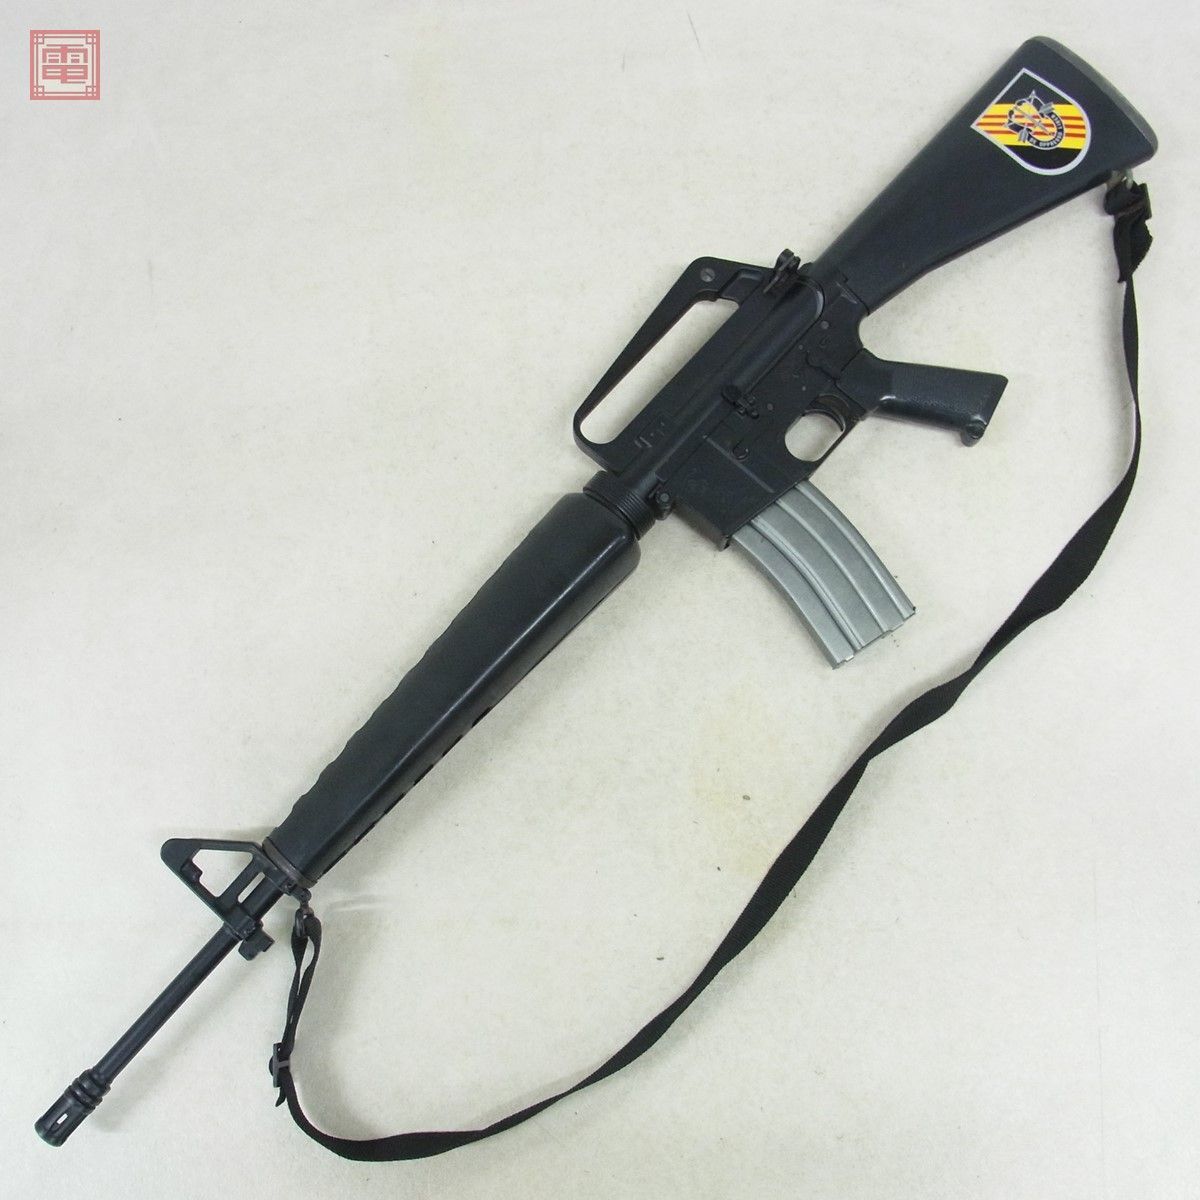  Marushin металлический модель оружия Colt M16A1 SMG текущее состояние товар [40